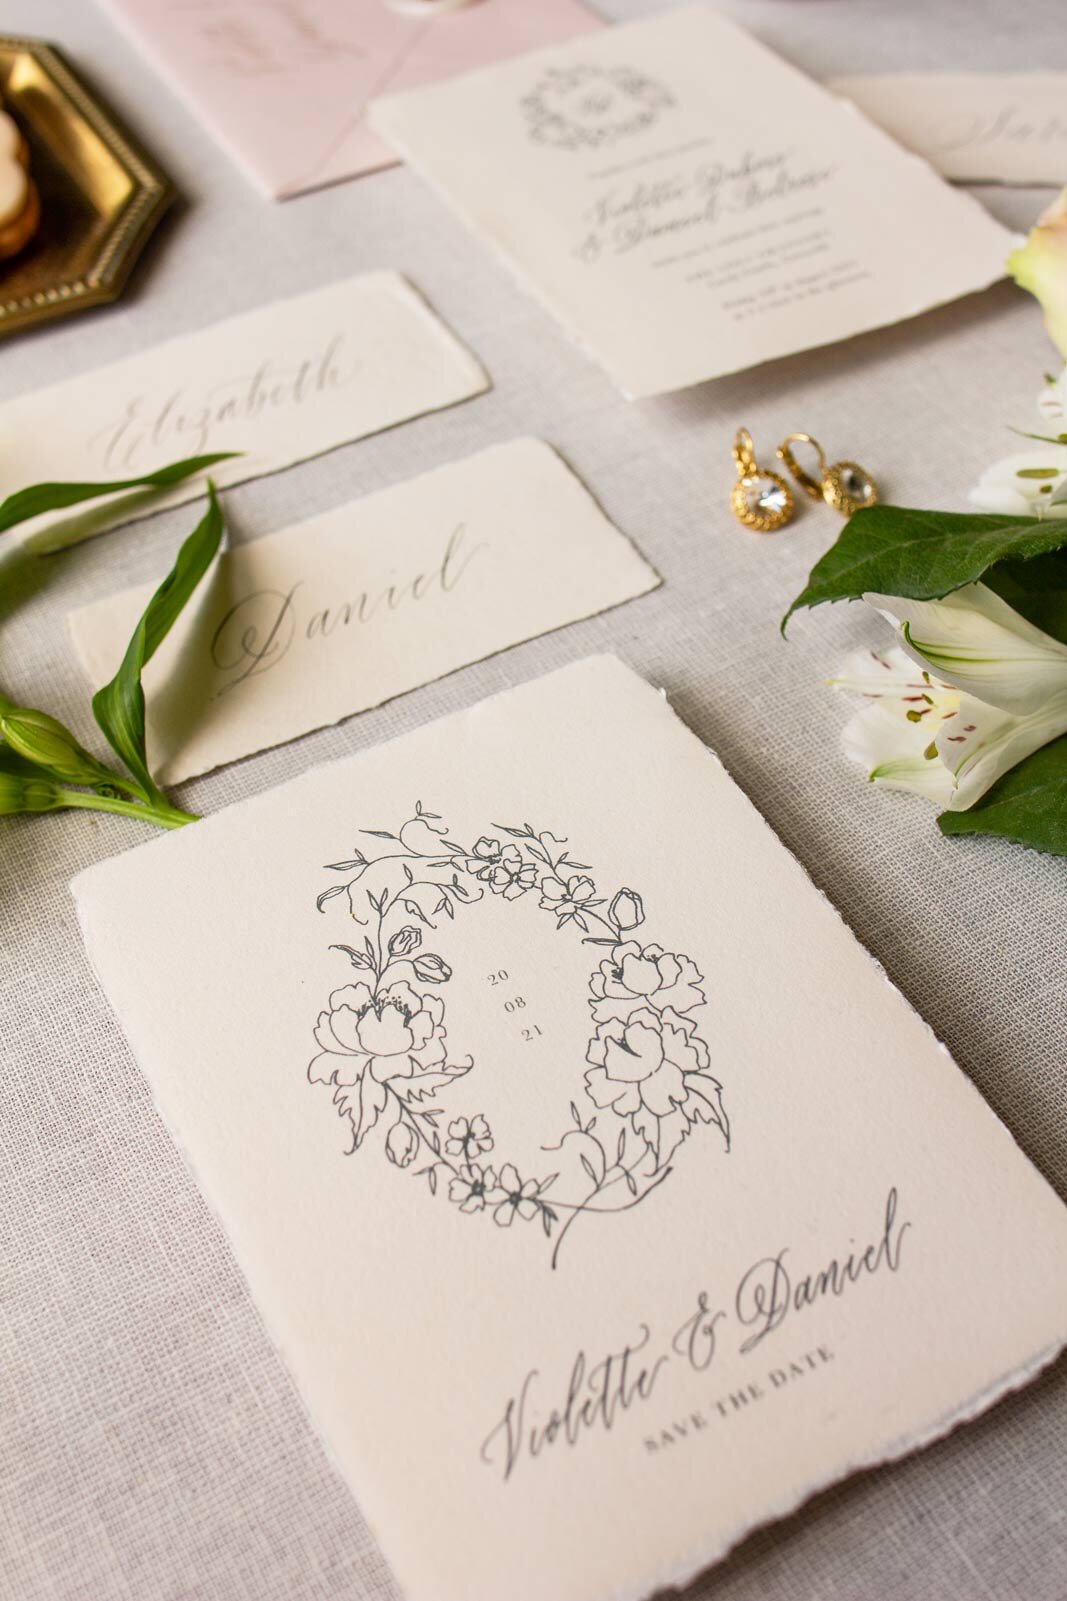 Violette & Daniel – Romantic wedding invitations on handmade paper for ...